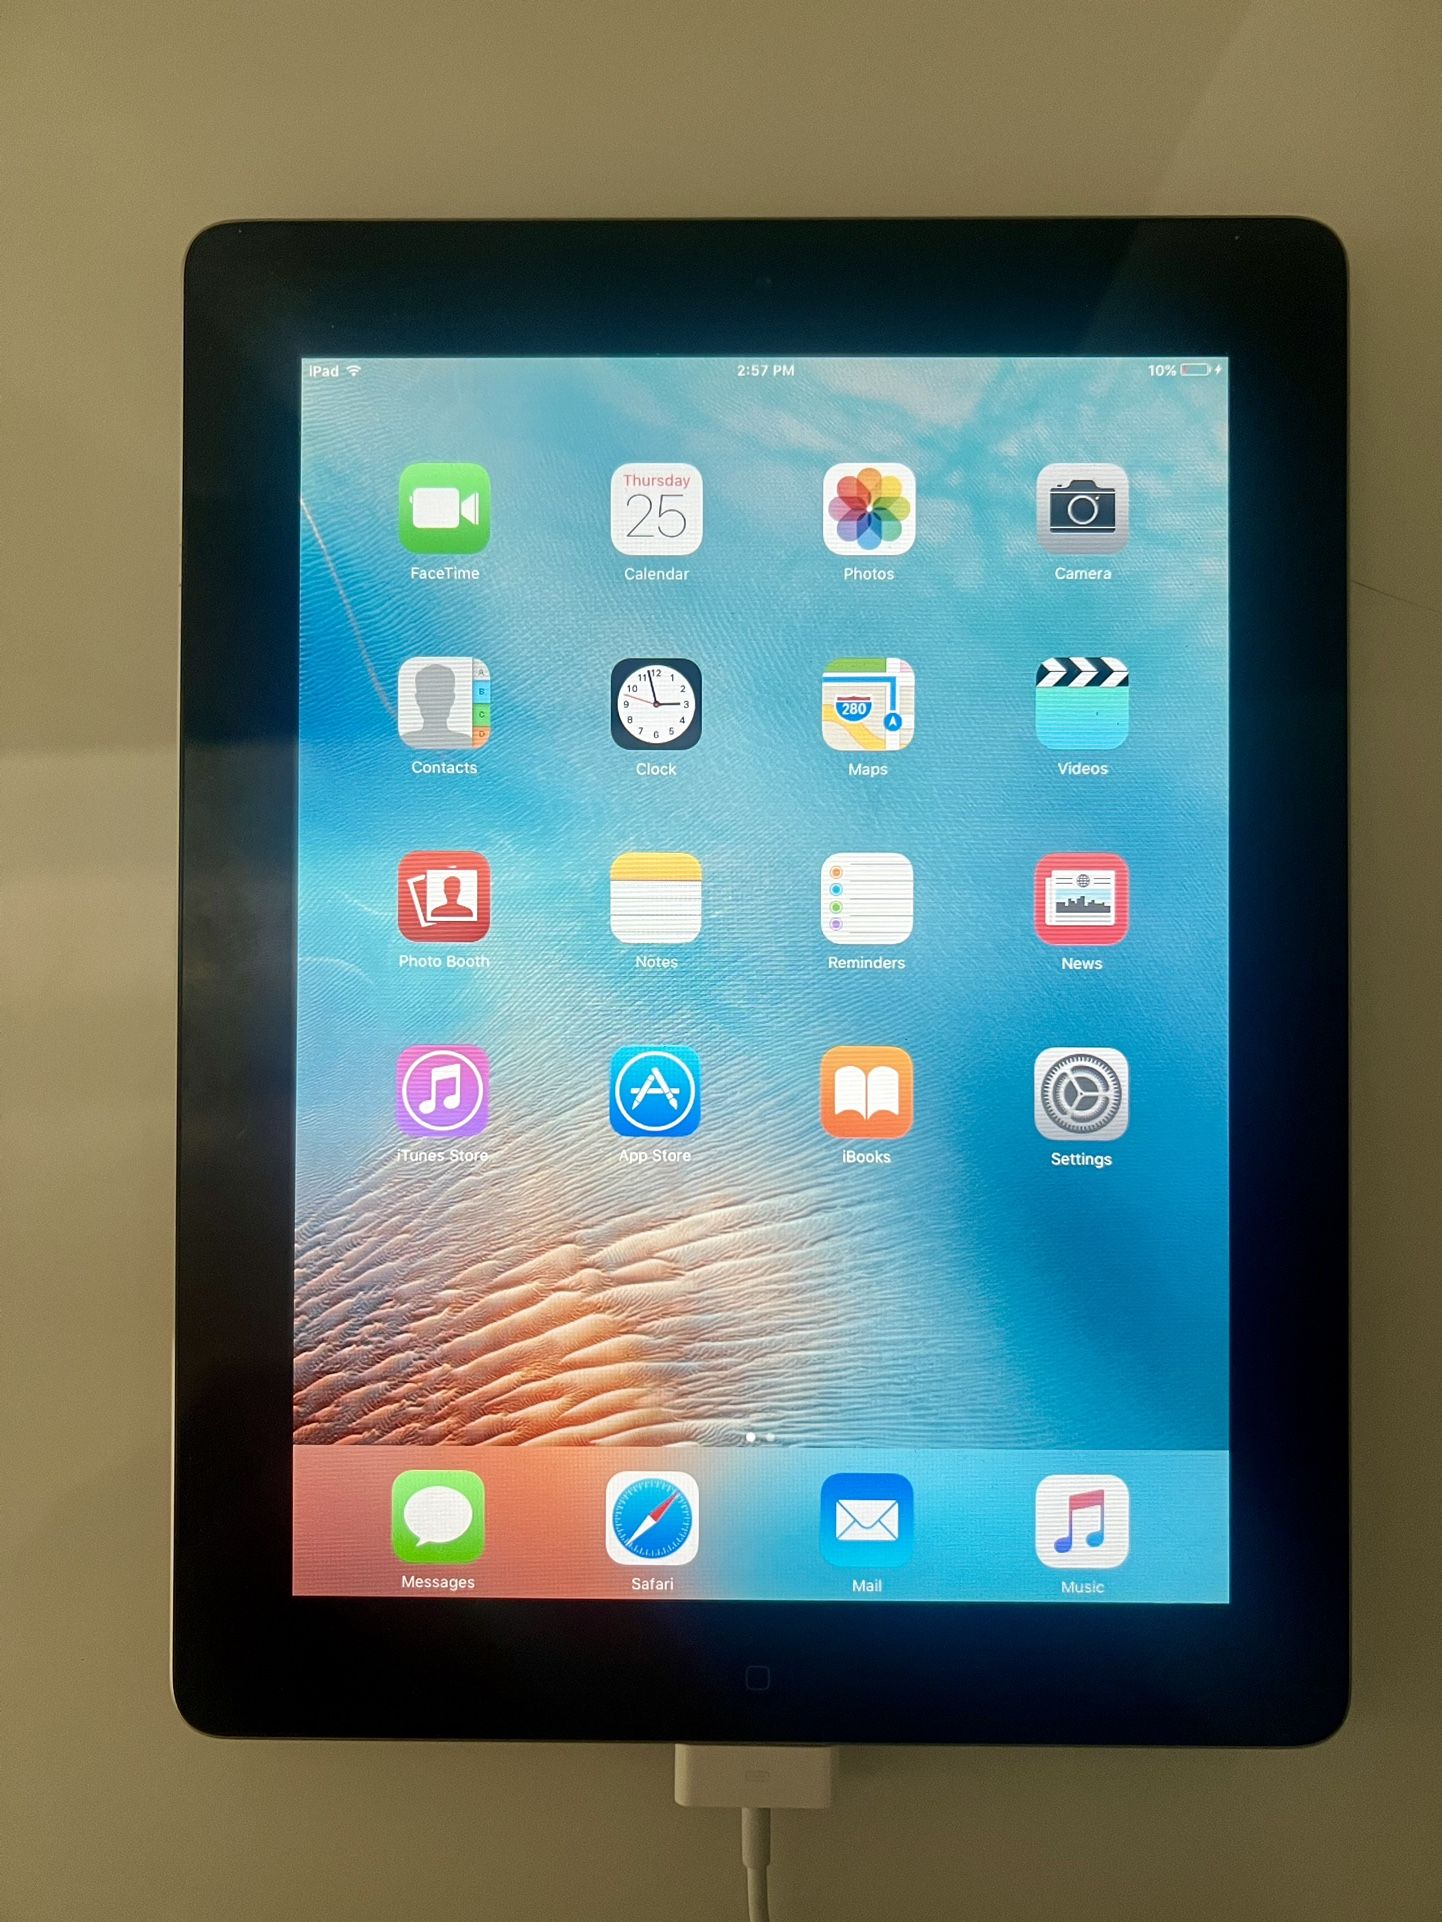 Apple iPad 2 WiFi Model